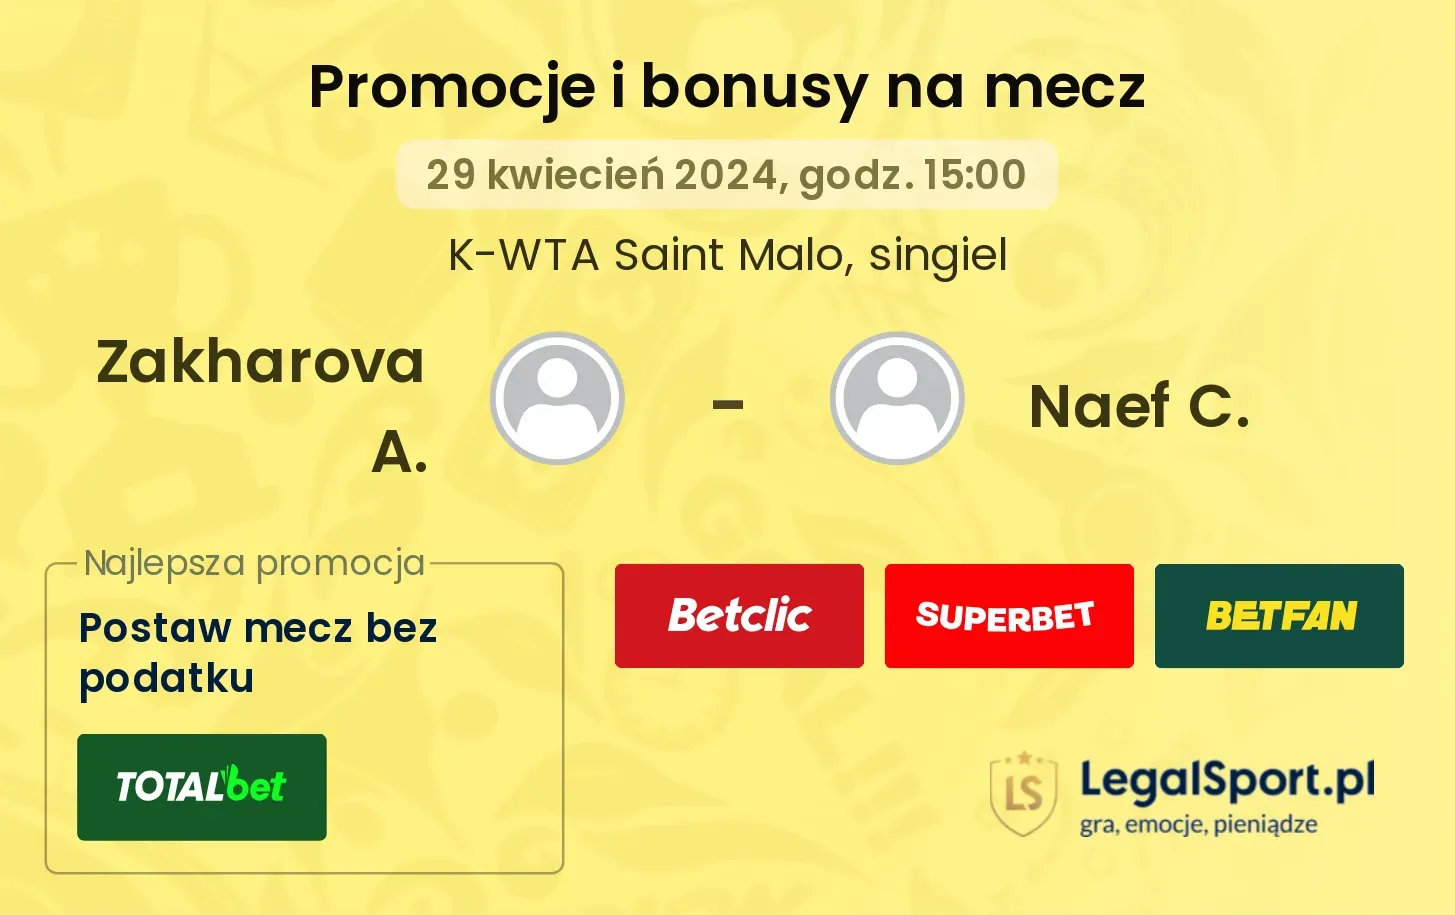 Zakharova A. - Naef C. promocje bonusy na mecz